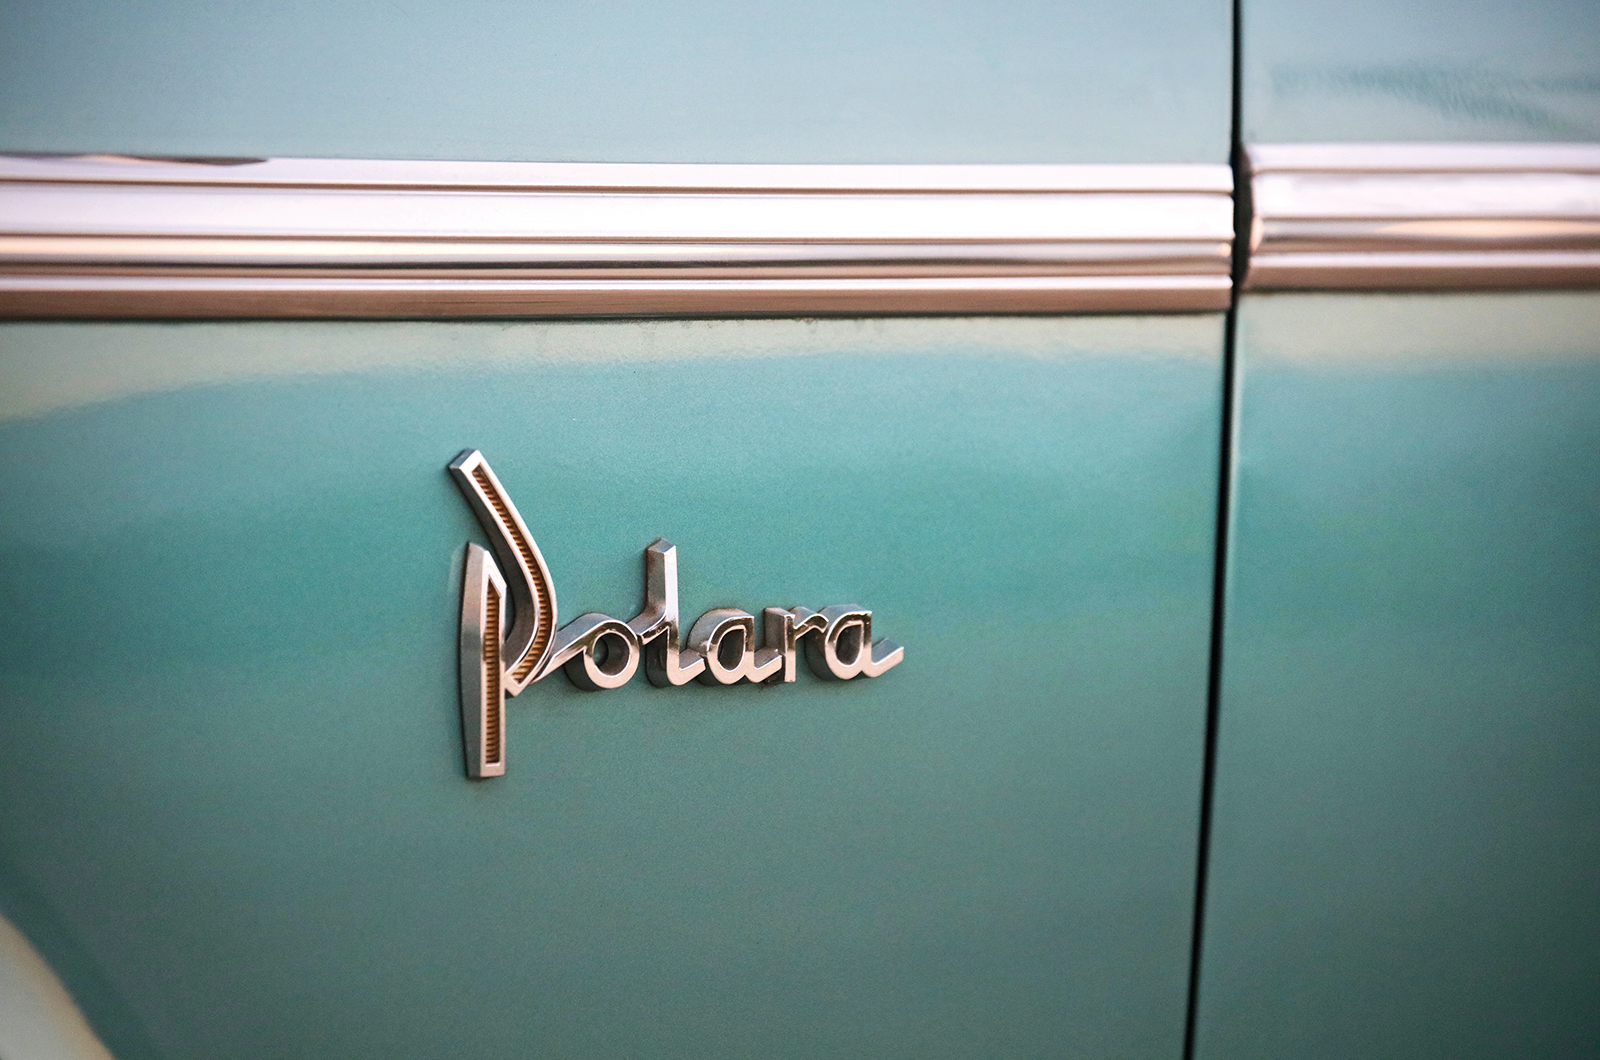 Classic & Sports Car – Ex marks the spot: driving the Dodge Polara